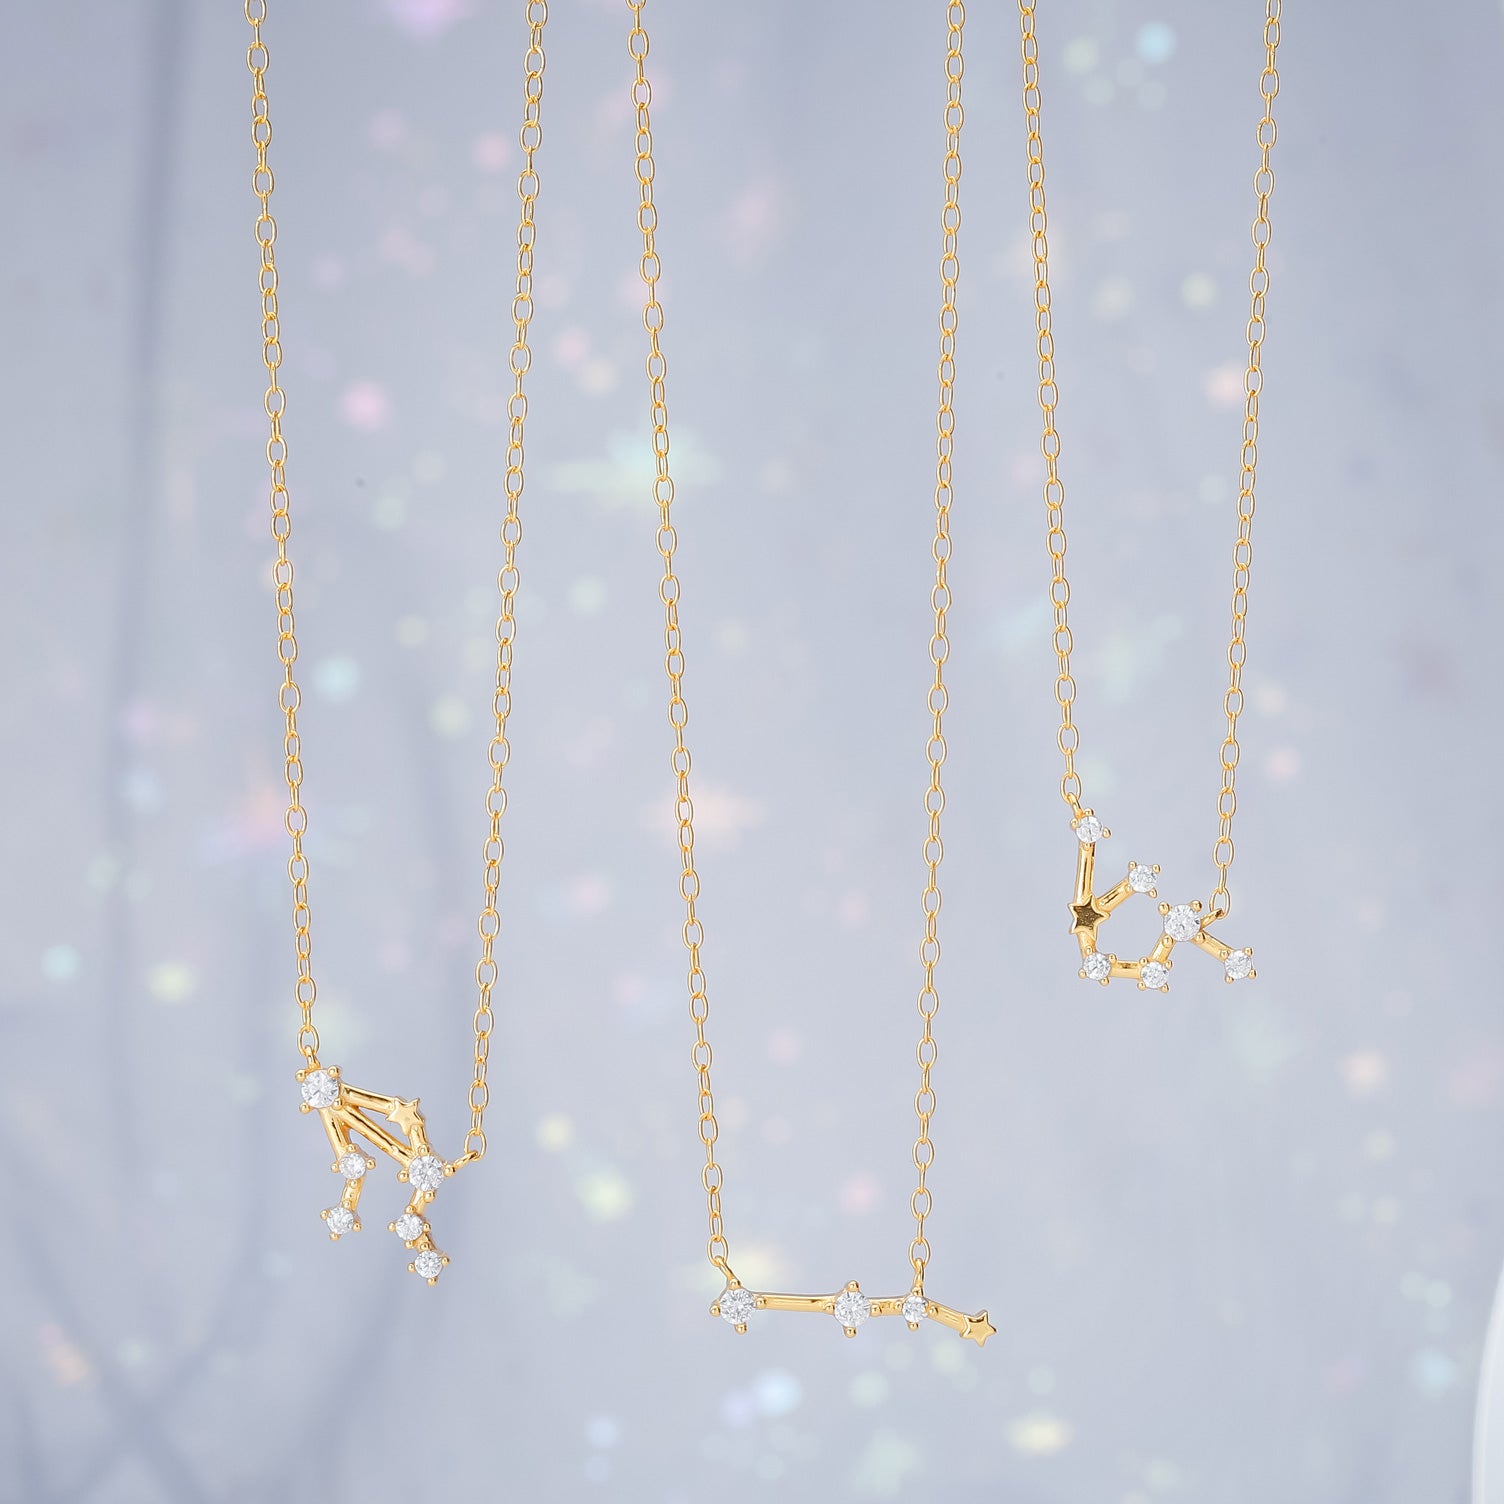 Silver Libra Constellation Necklace Set